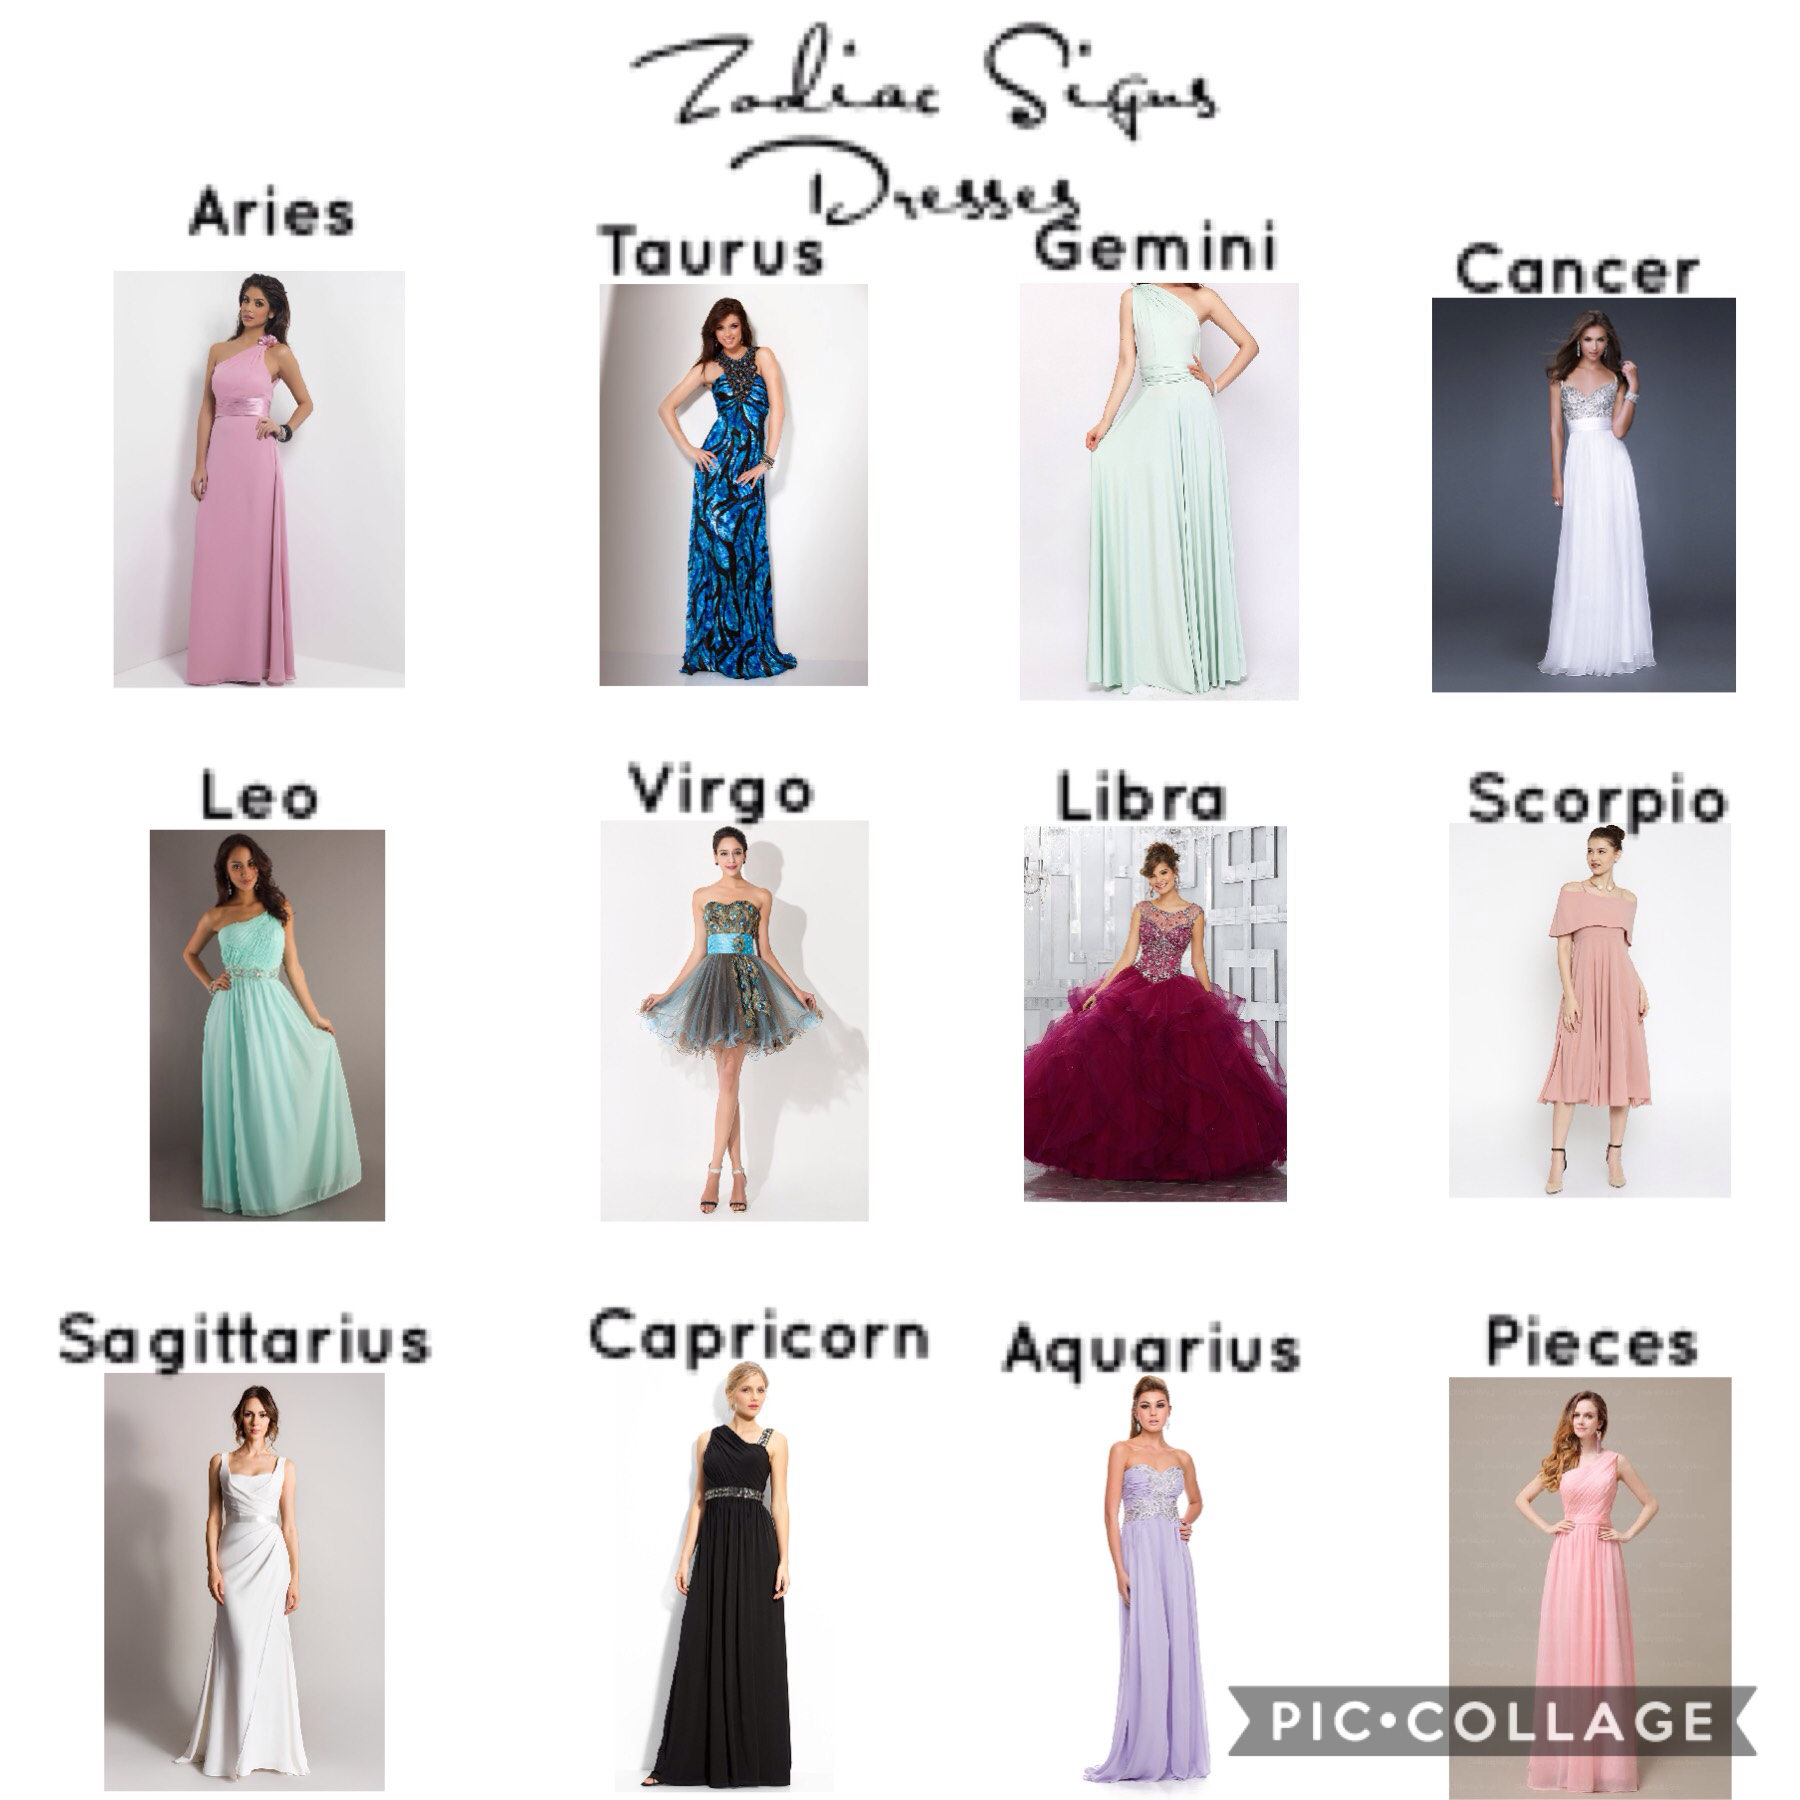 Zodiac Signs
Dresses